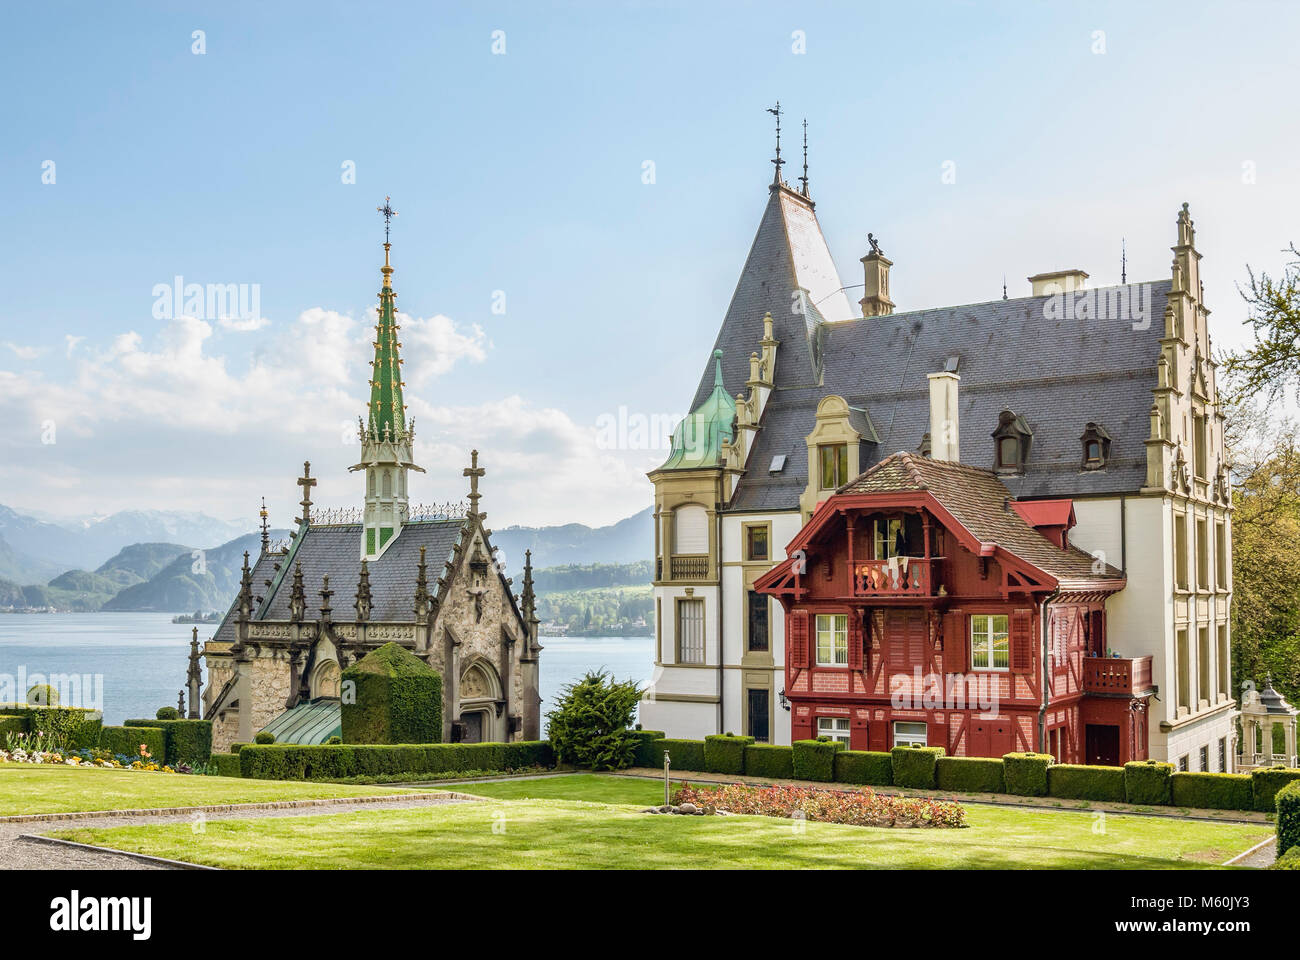 Schloss Meggenhorn at Lake Lucerne, Meggenhorn near Lucerne, Switzerland Stock Photo